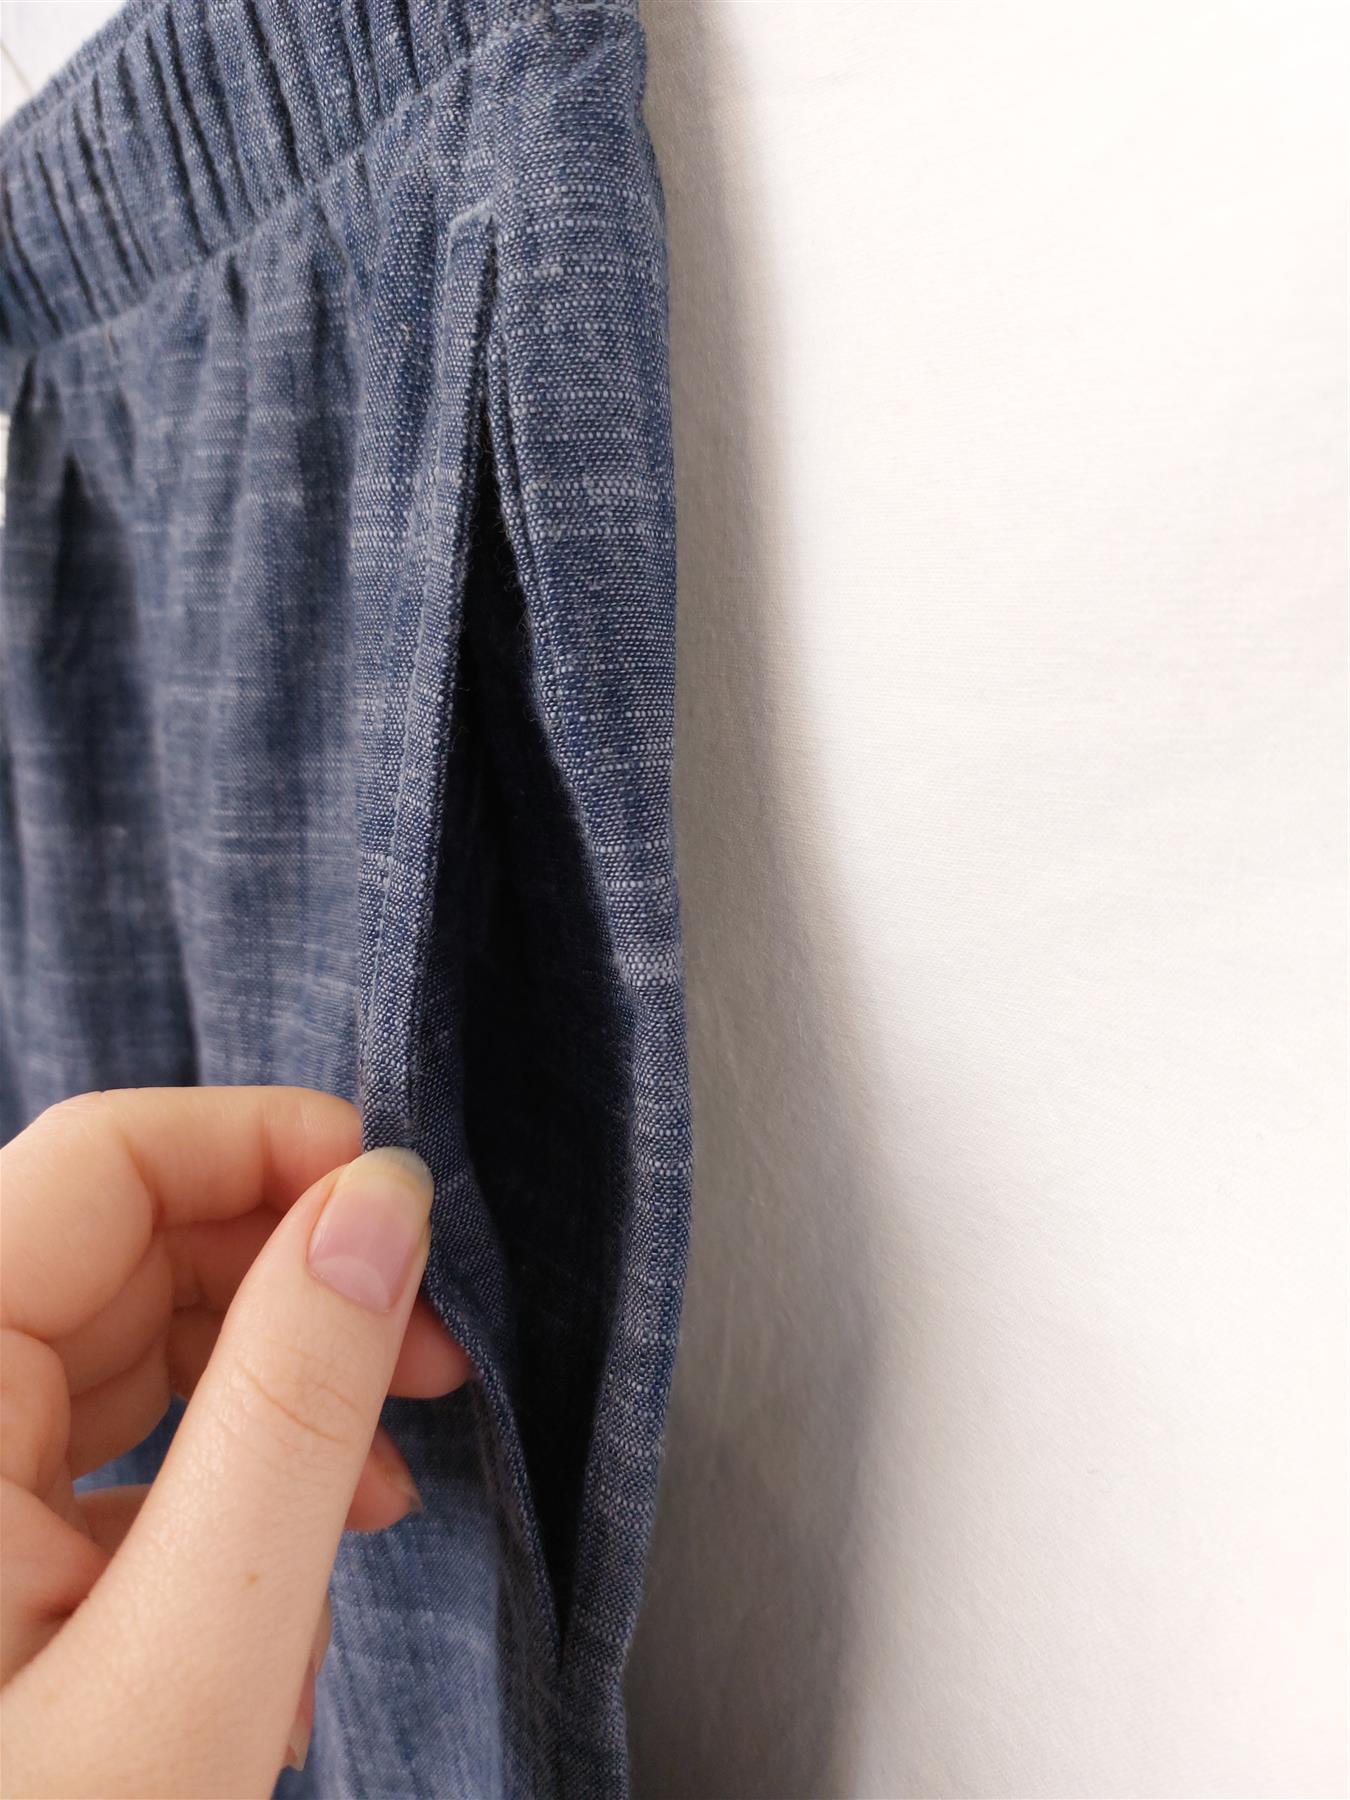 Men's Cotton Pyjama Bottoms F&F Lounge Essentials Comfy PJ Pants Blue Denim-Look